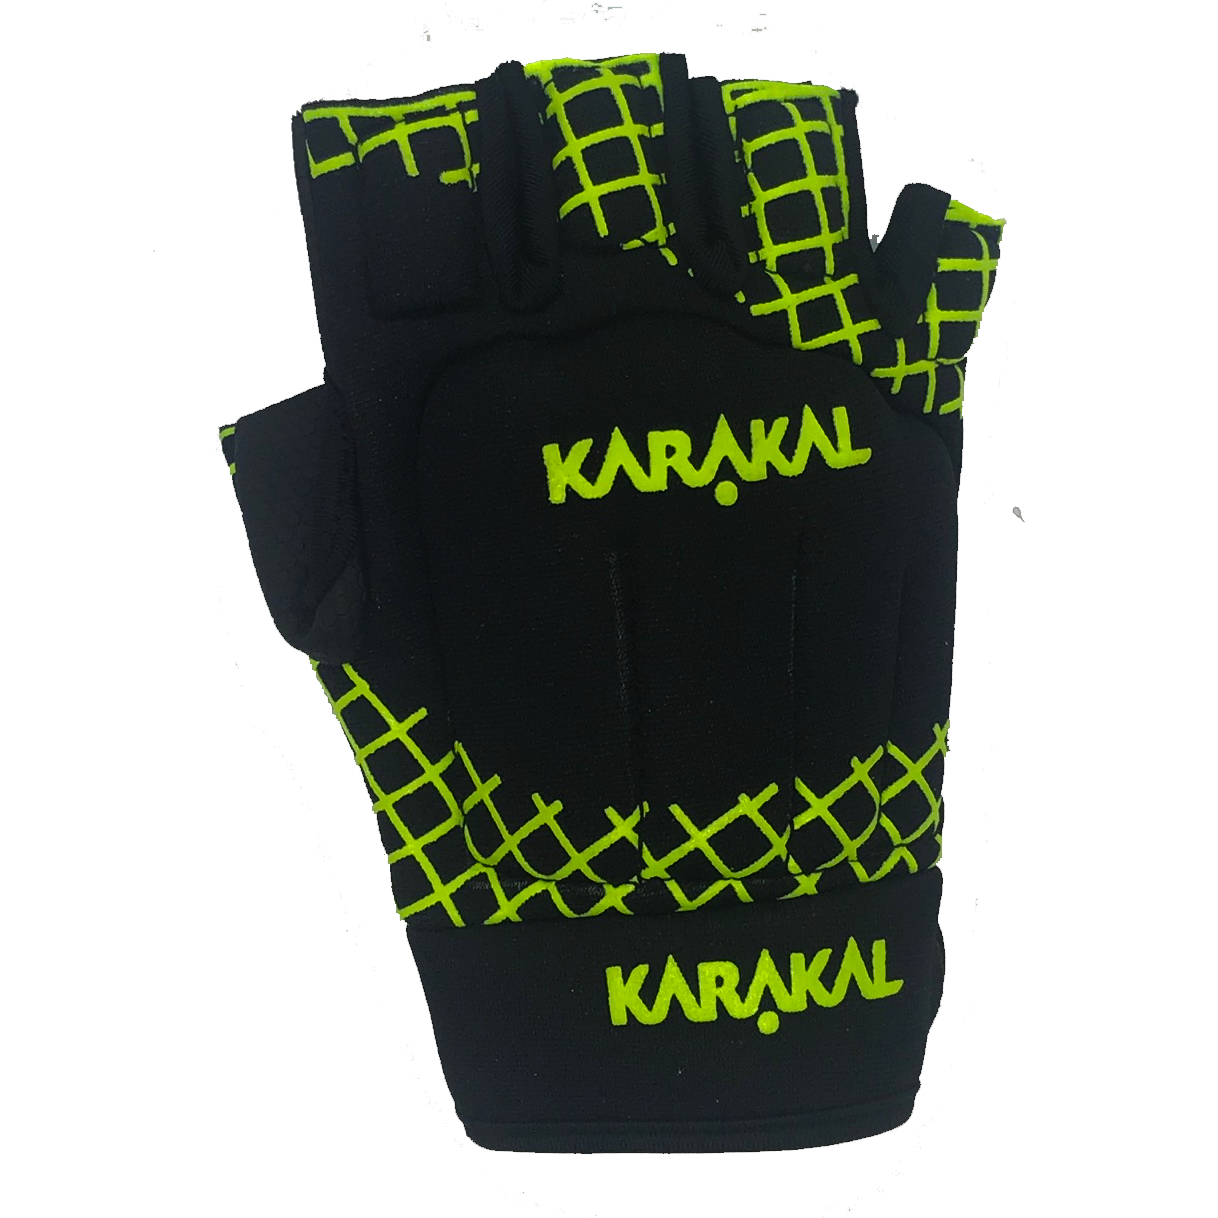 Karakal Pro Hurling Glove Right Hand